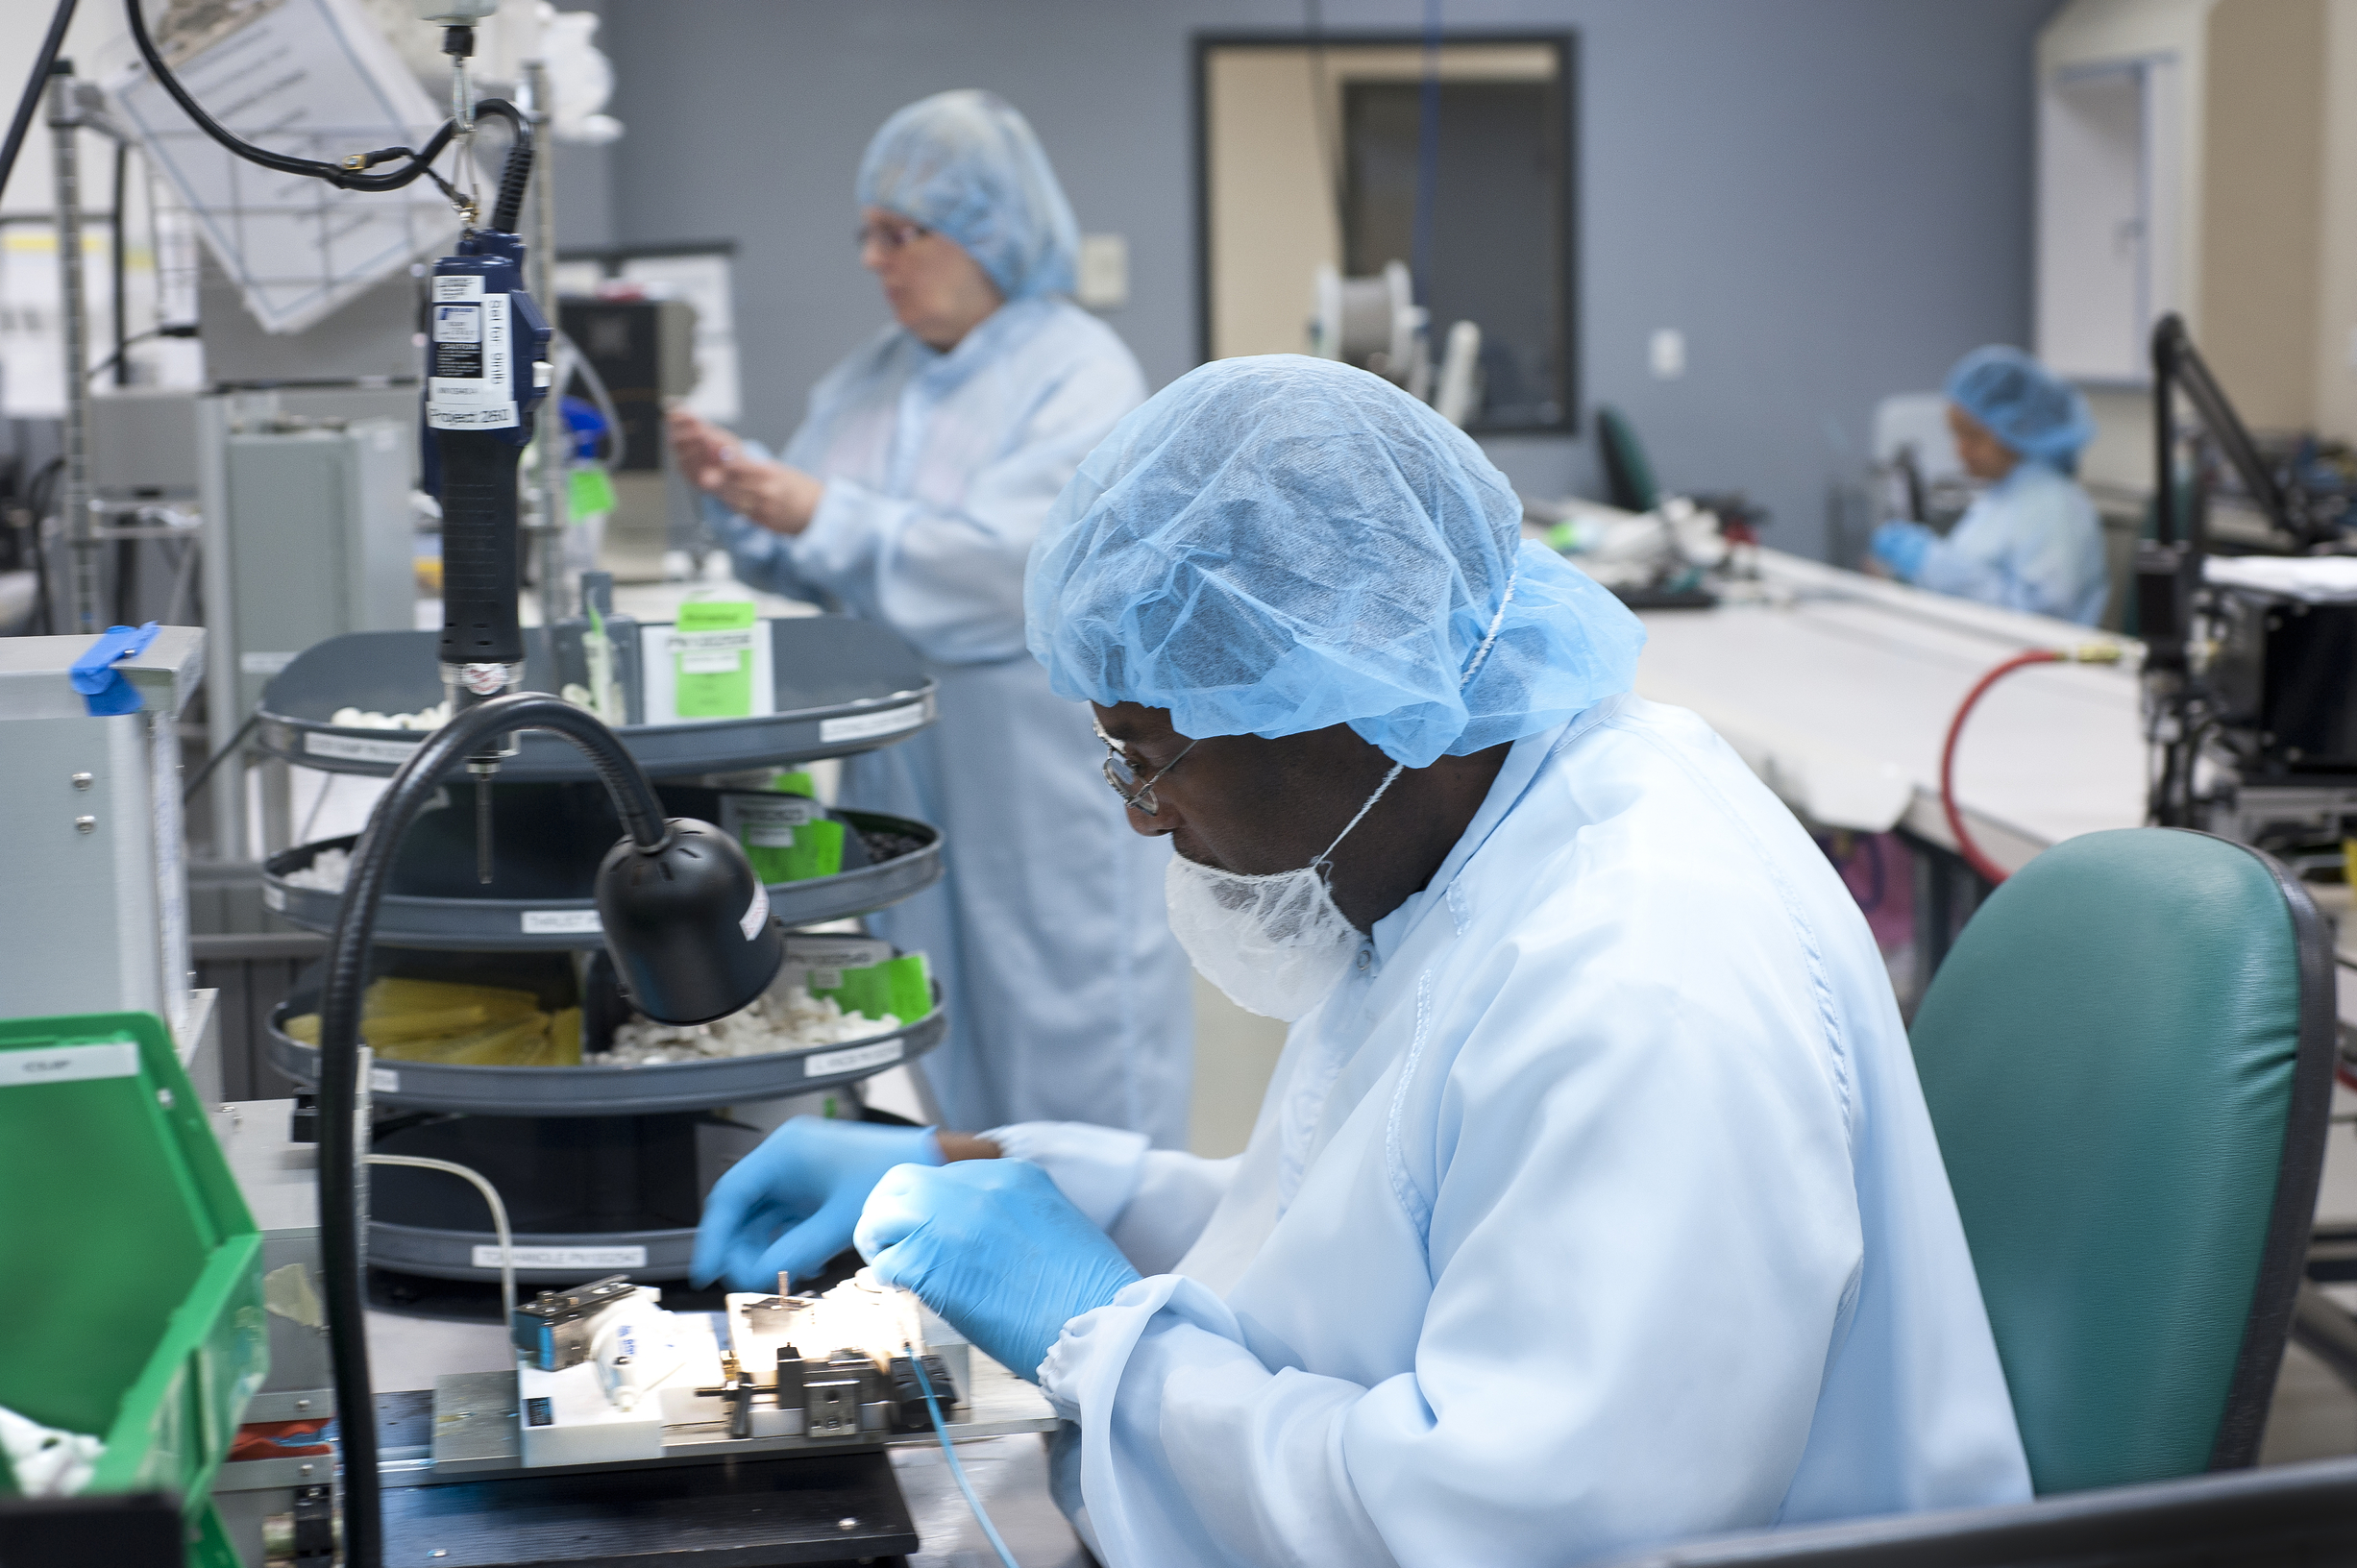 Technicians wearing PPE in a lab.